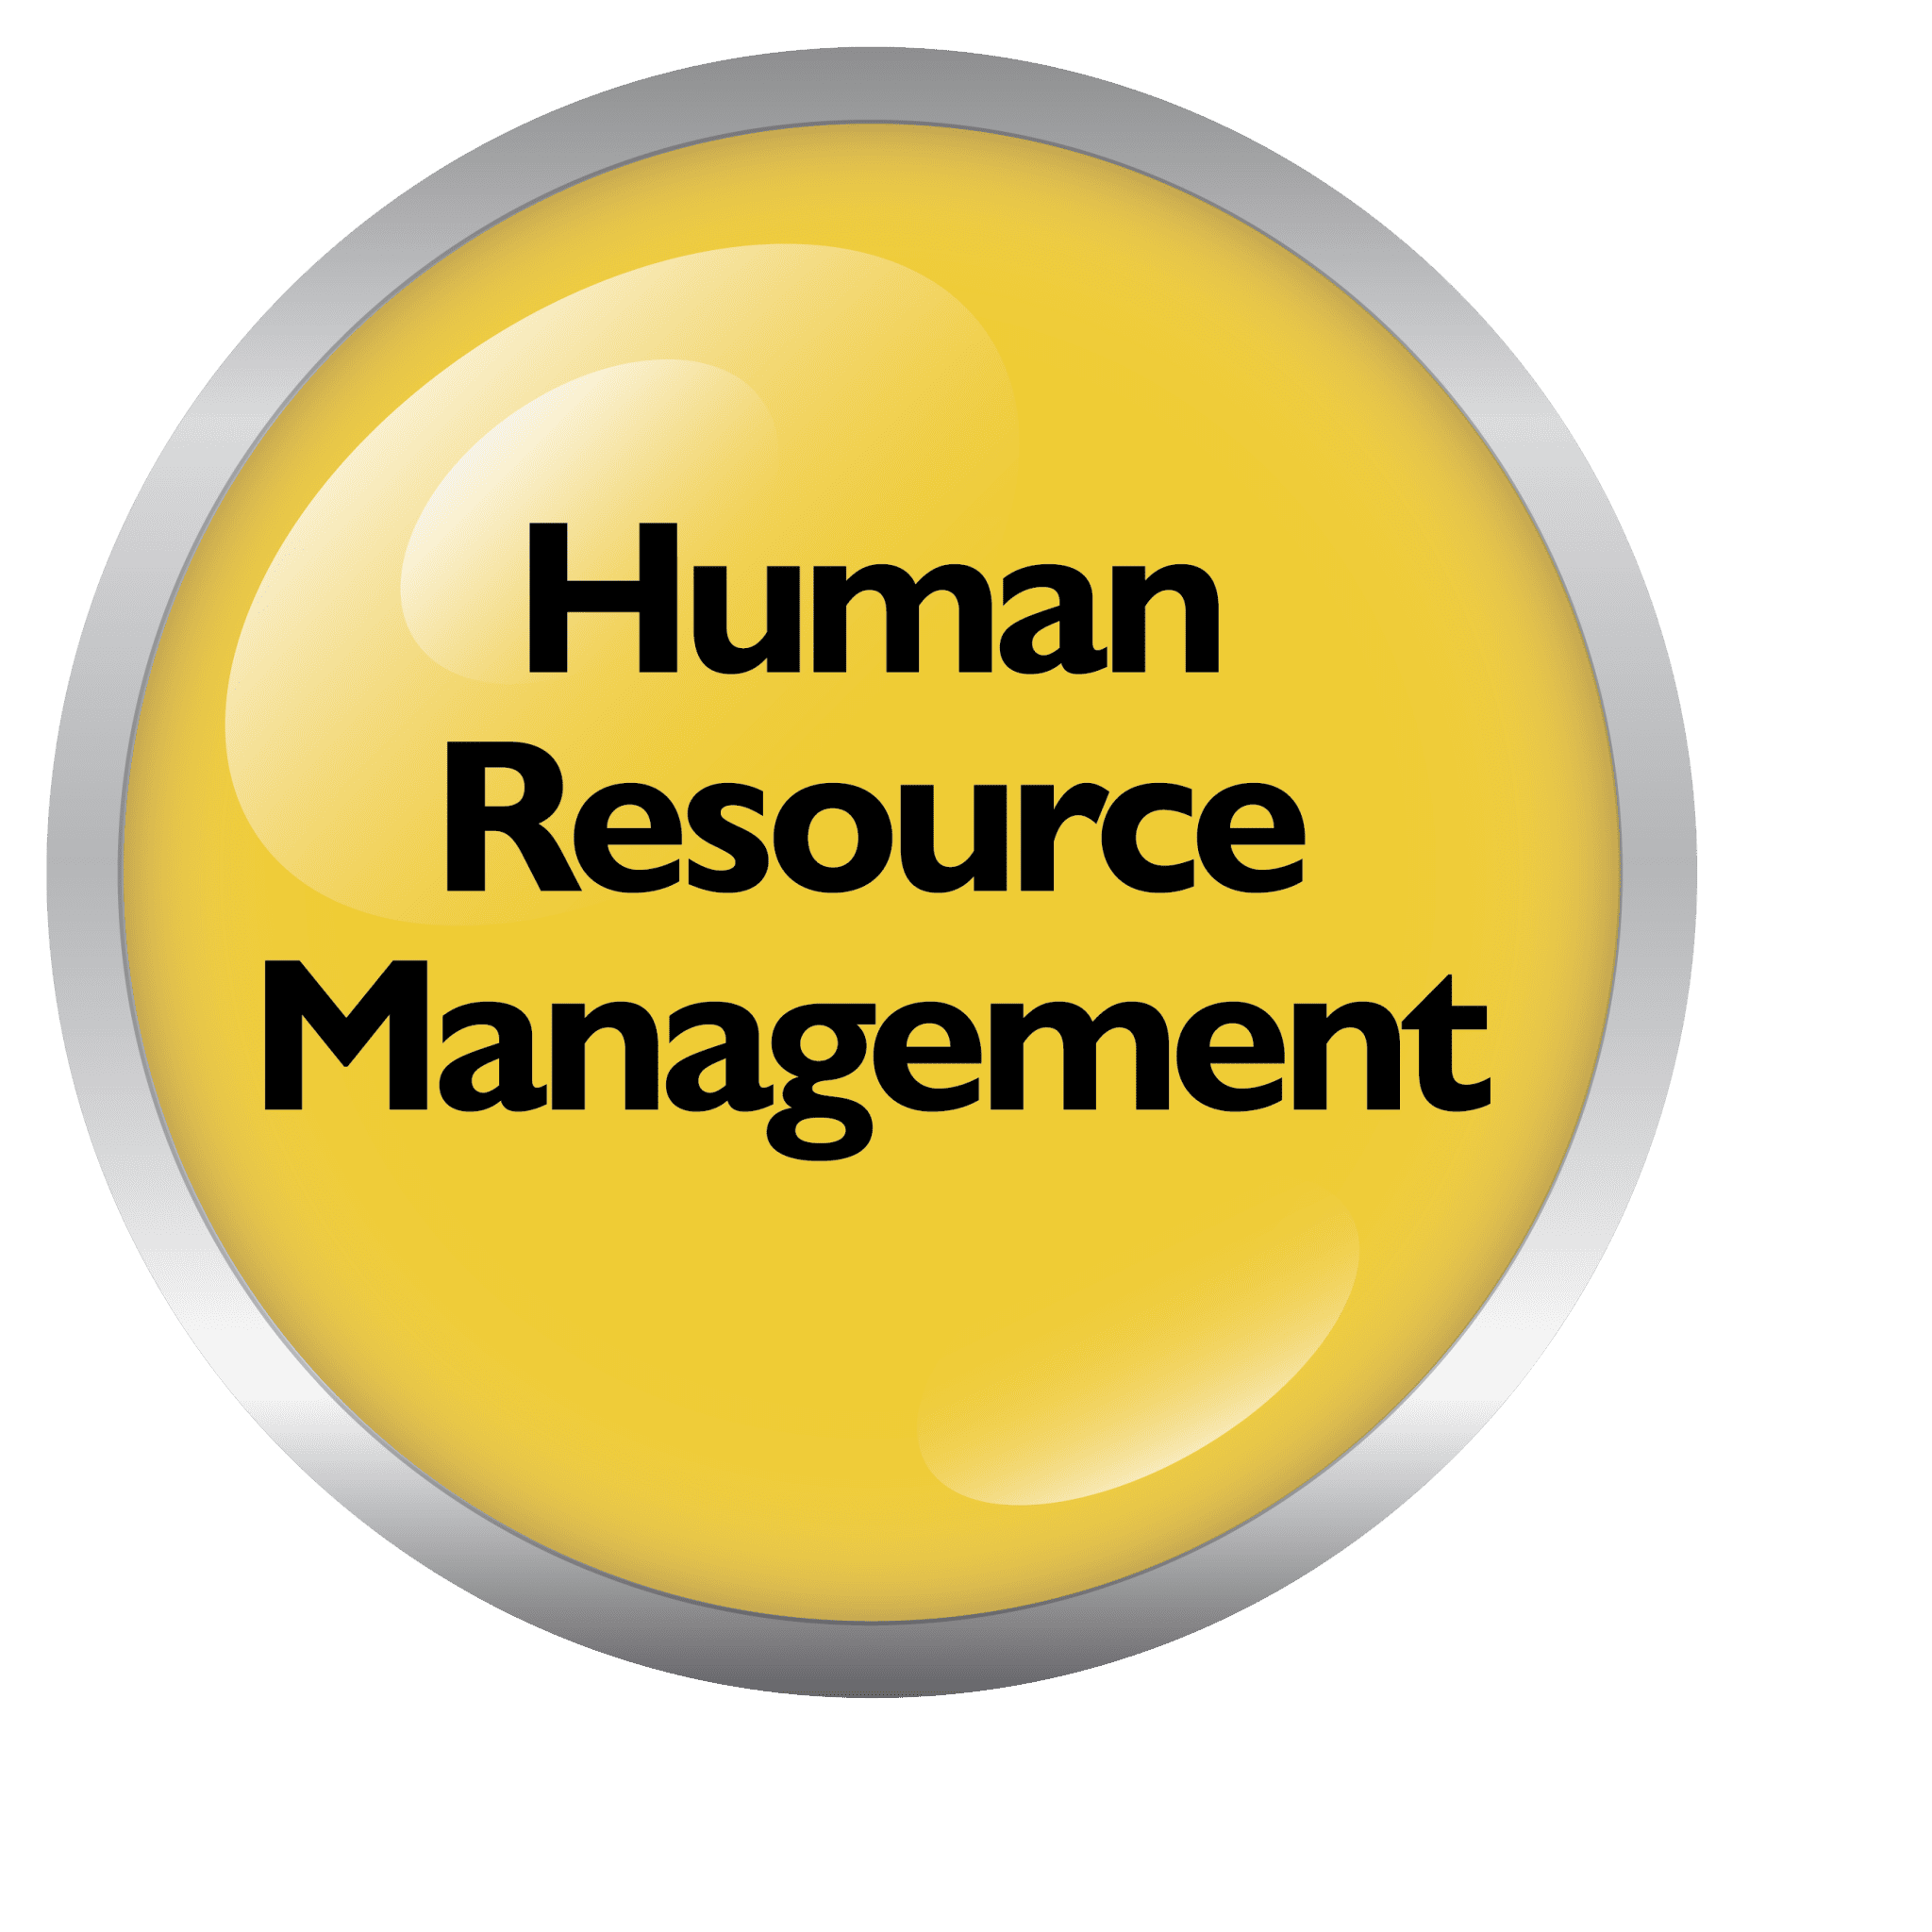 Human Resource Management SPICE Framework